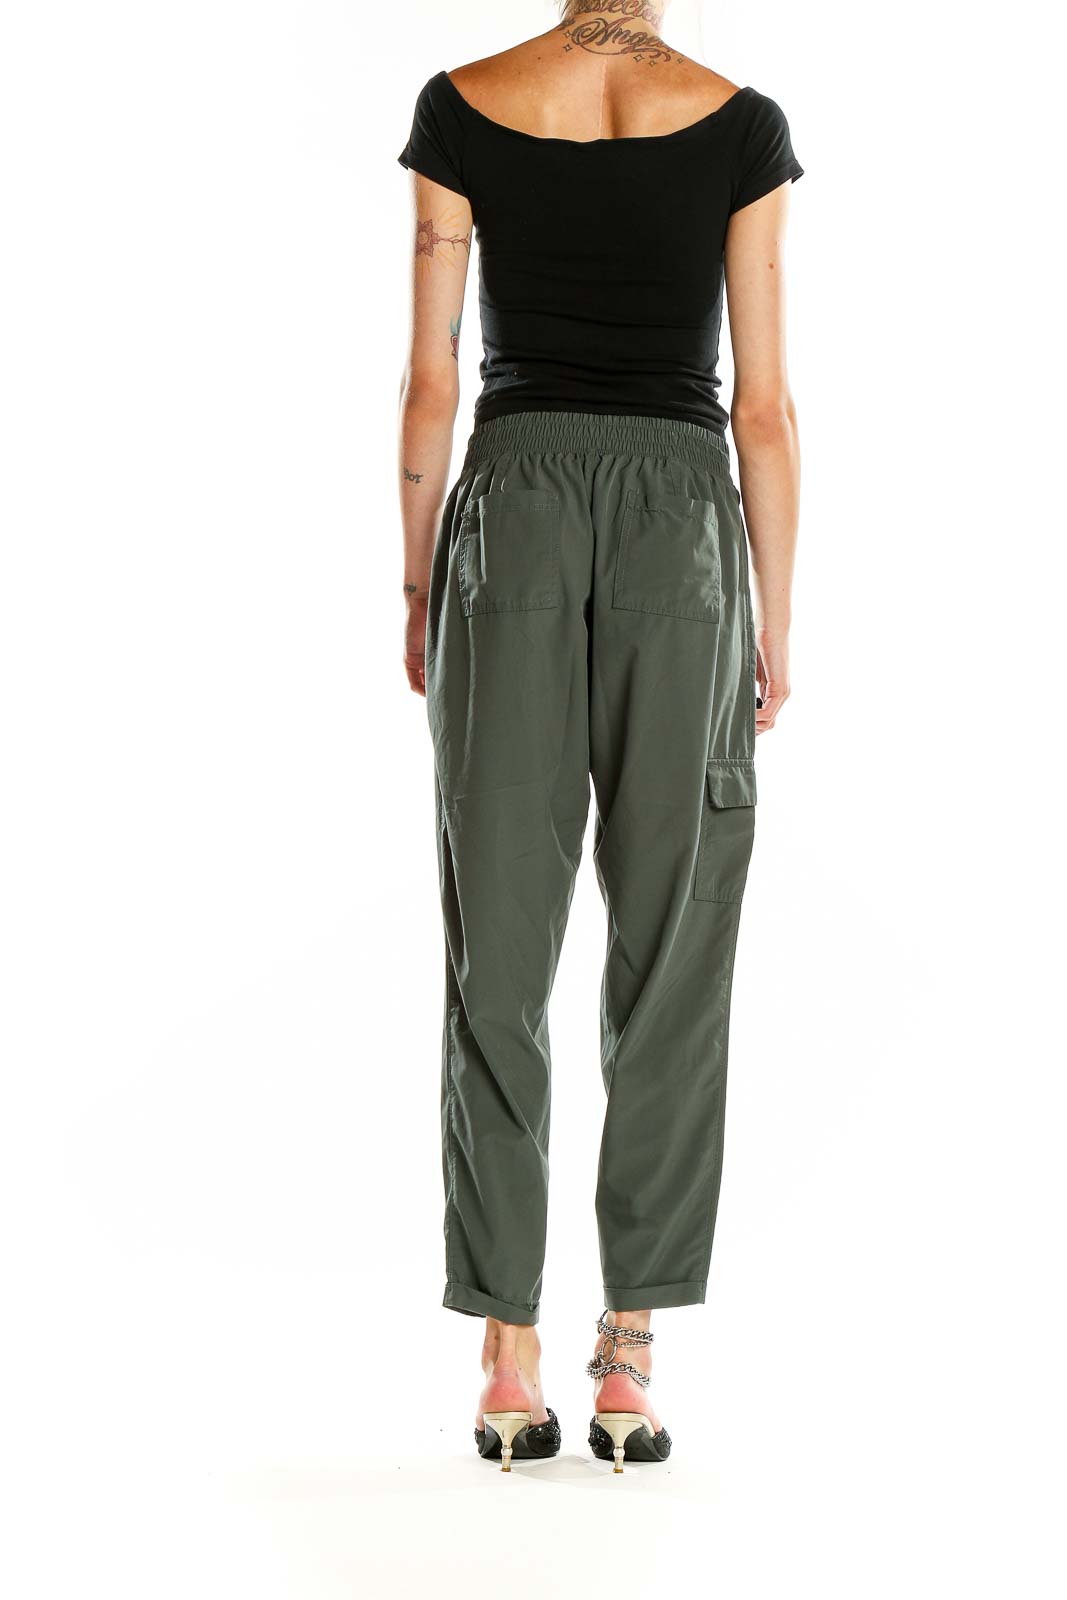 apana - Green Slim Solid Pants Polyester Spandex